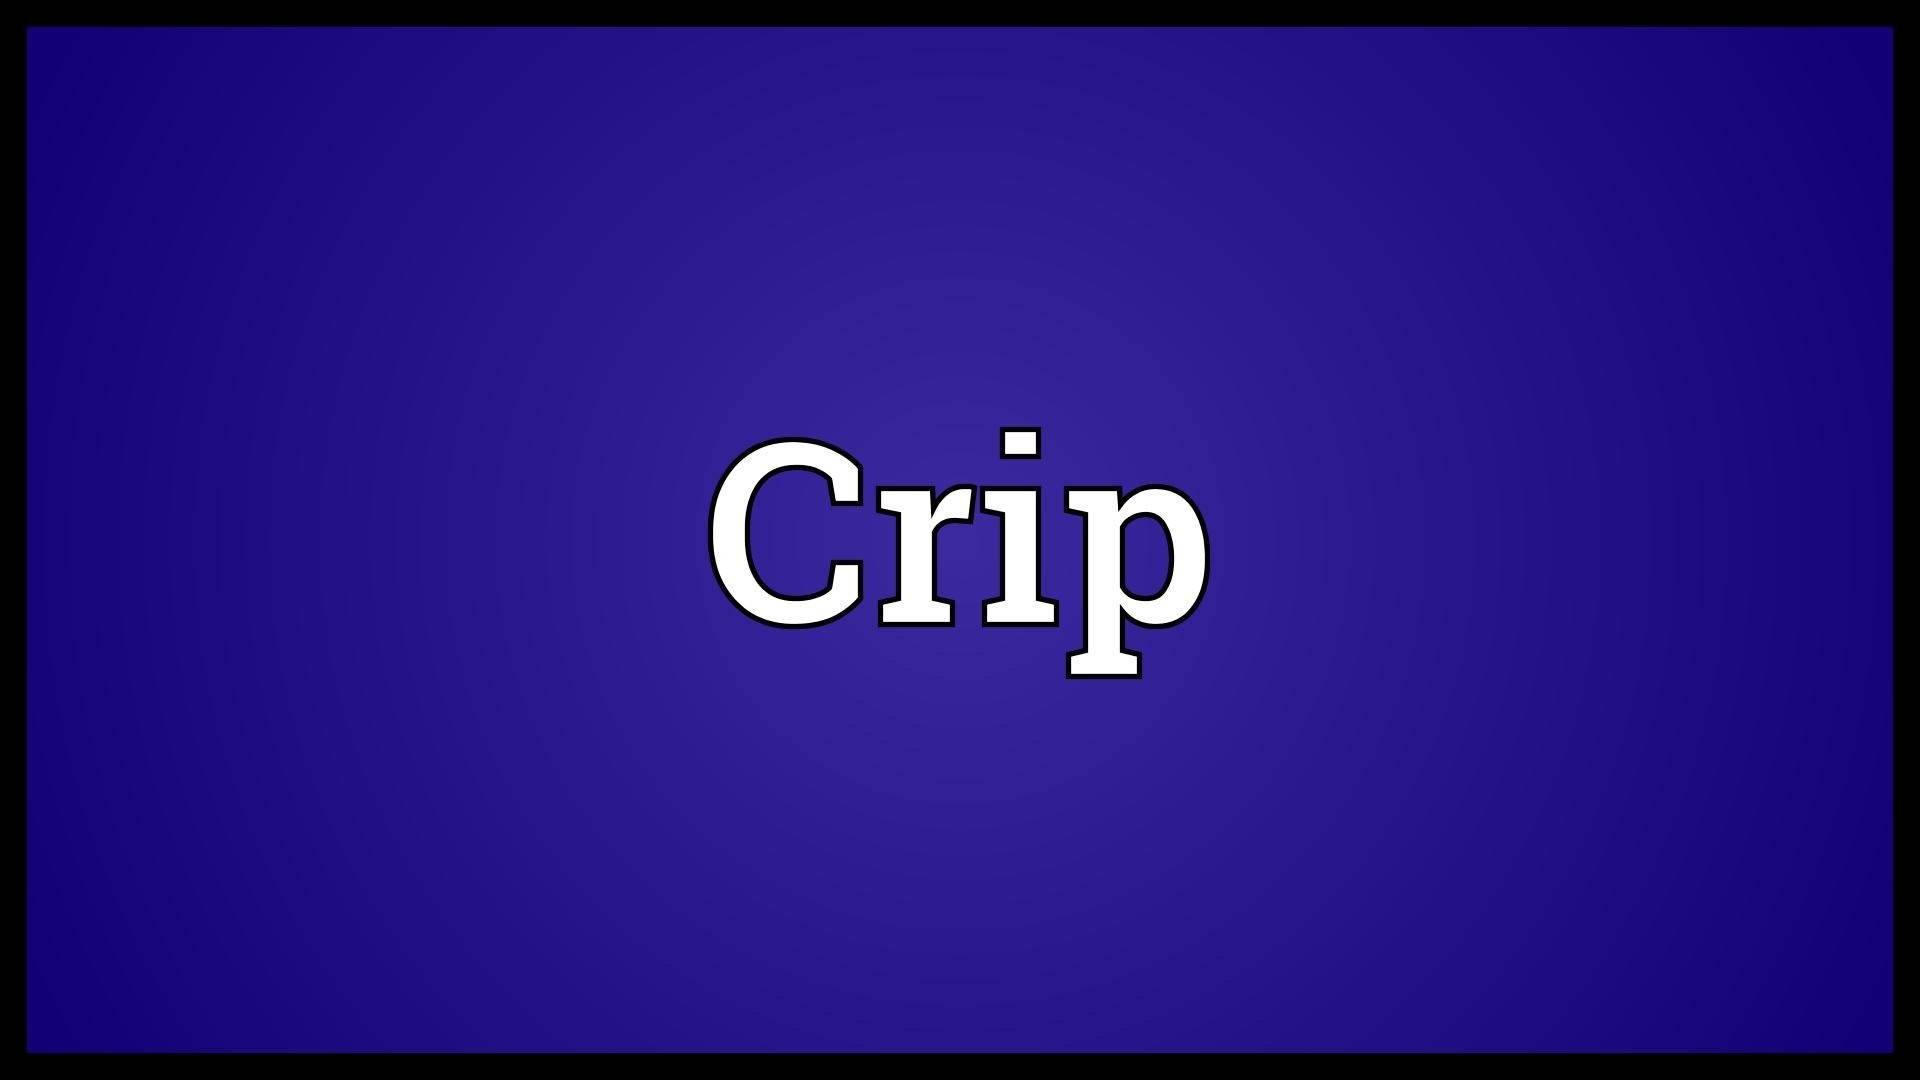 Crip Minimalist White Lettering Background